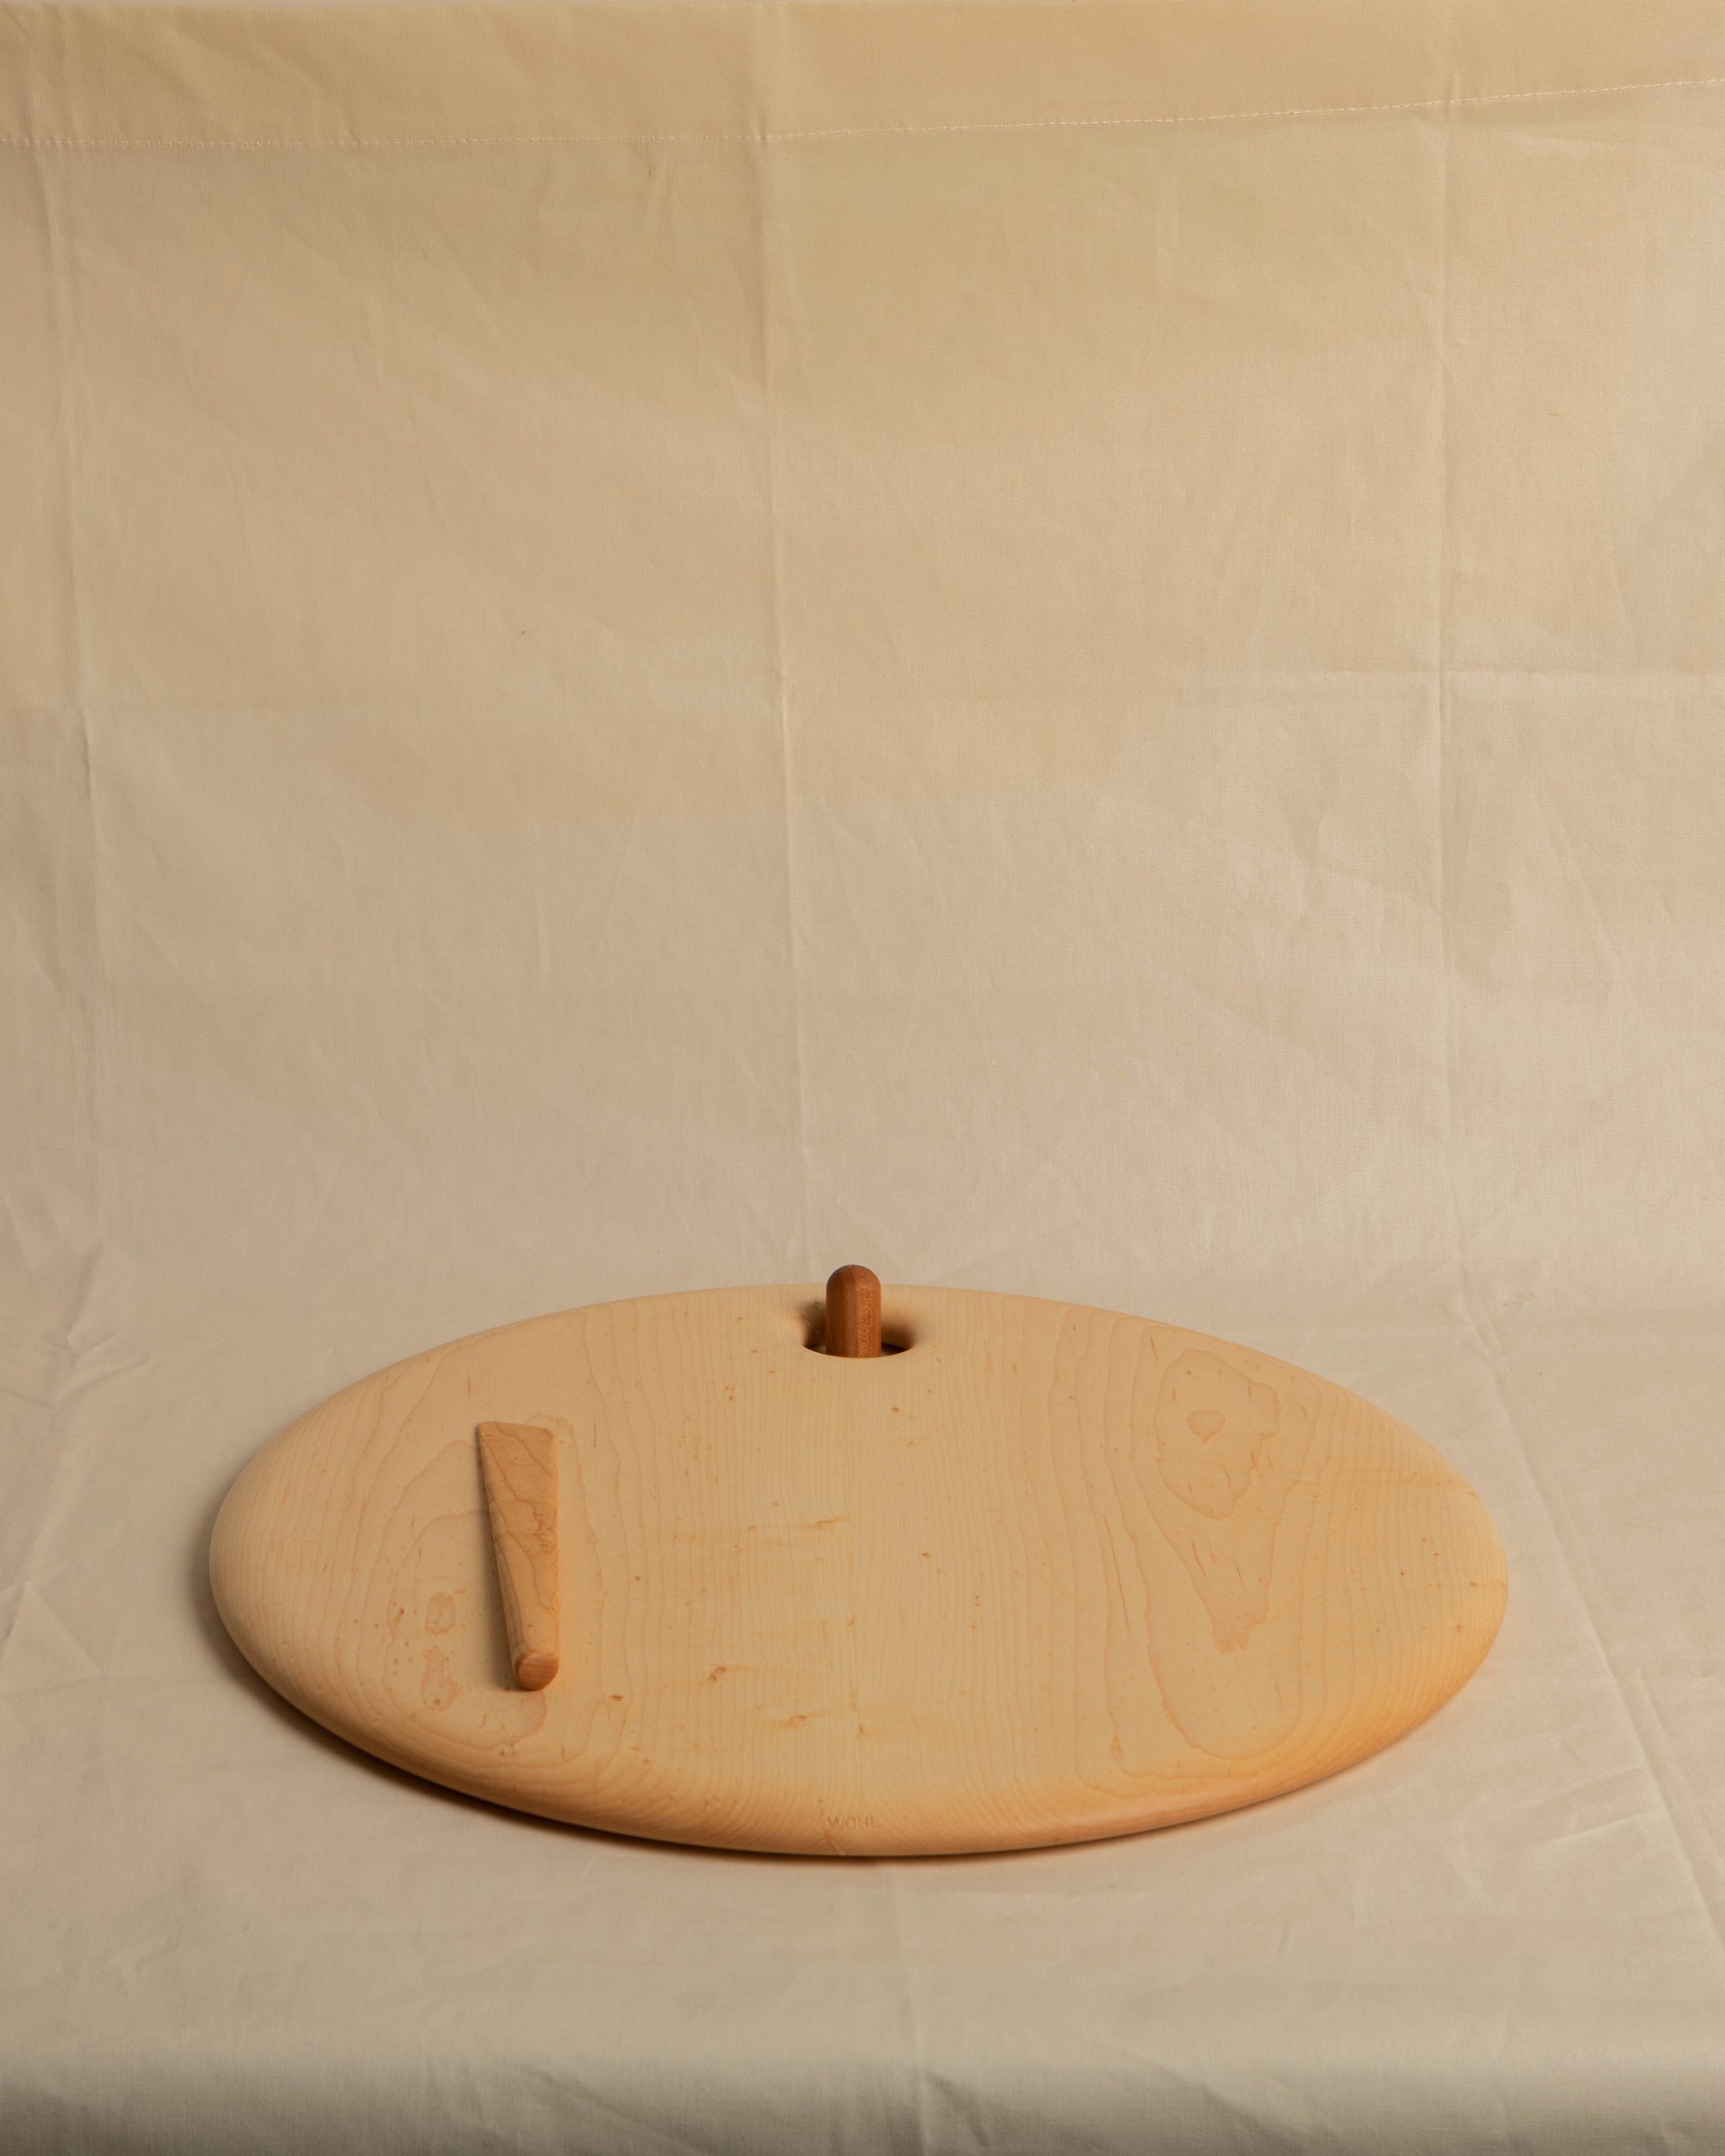 Cutting Board, Large Round #7 by Edward Wohl